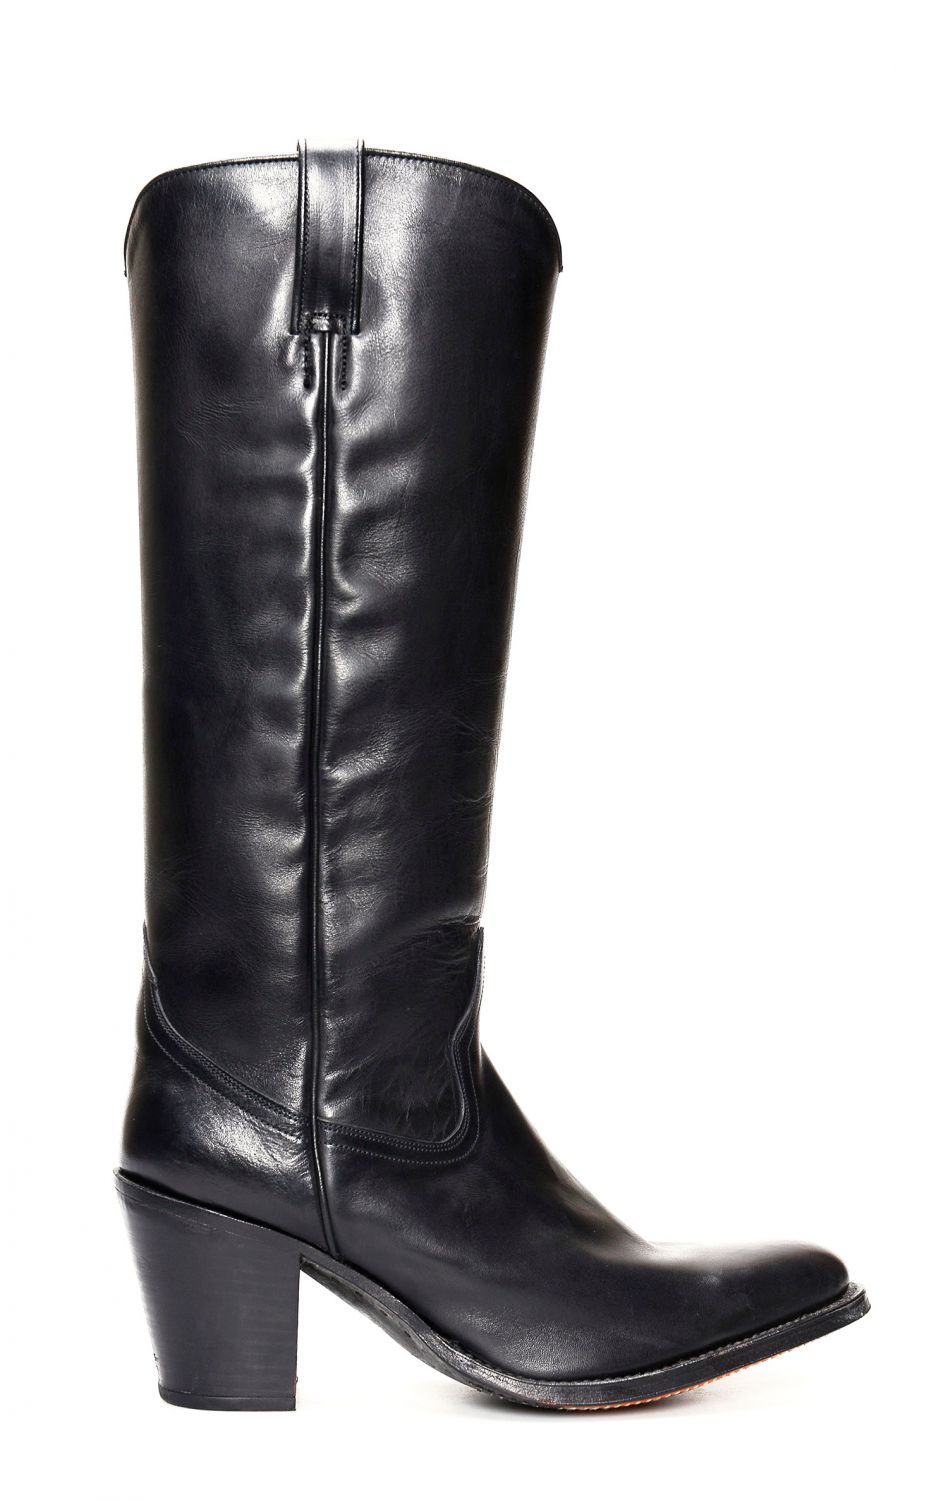 Tony Mora Boots - Black Palermo Leather